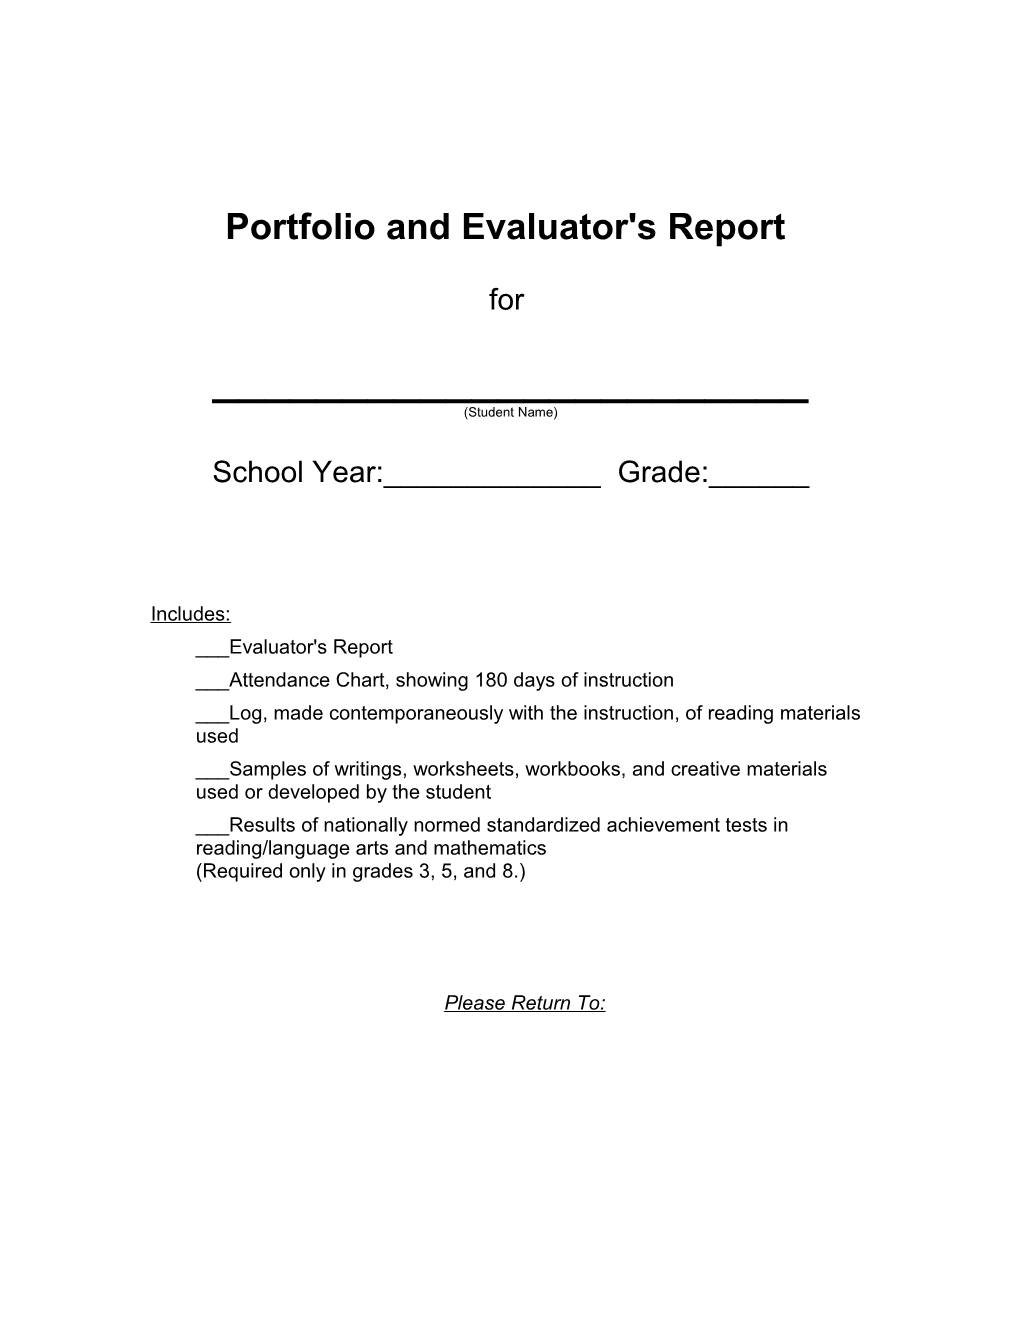 Portfolio and Evaluator's Report